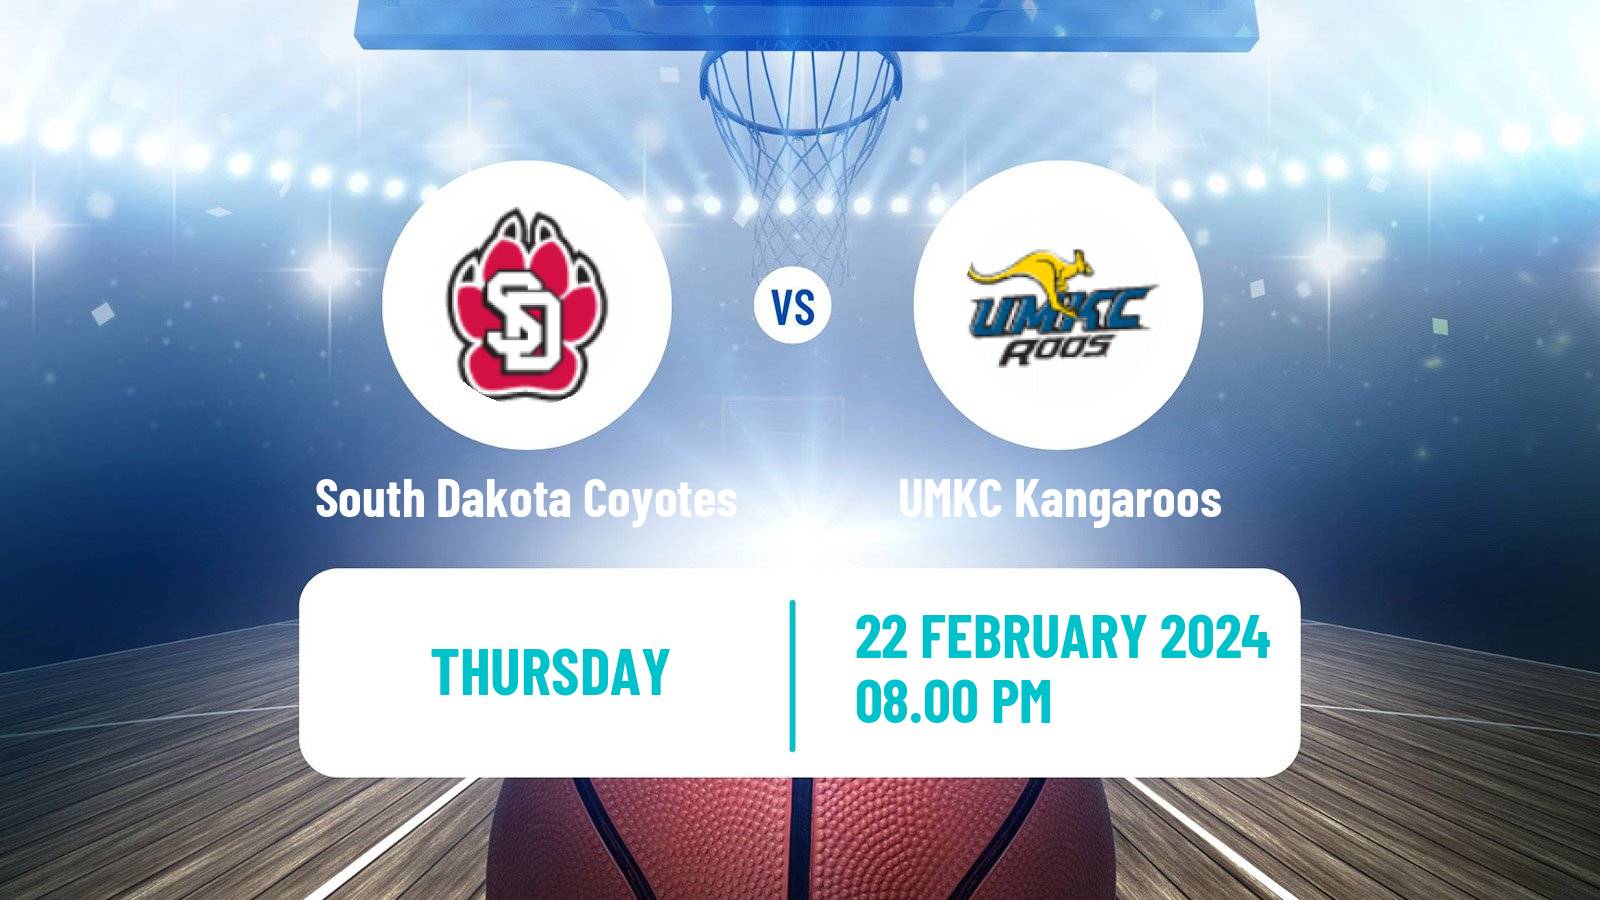 Basketball NCAA College Basketball South Dakota Coyotes - UMKC Kangaroos